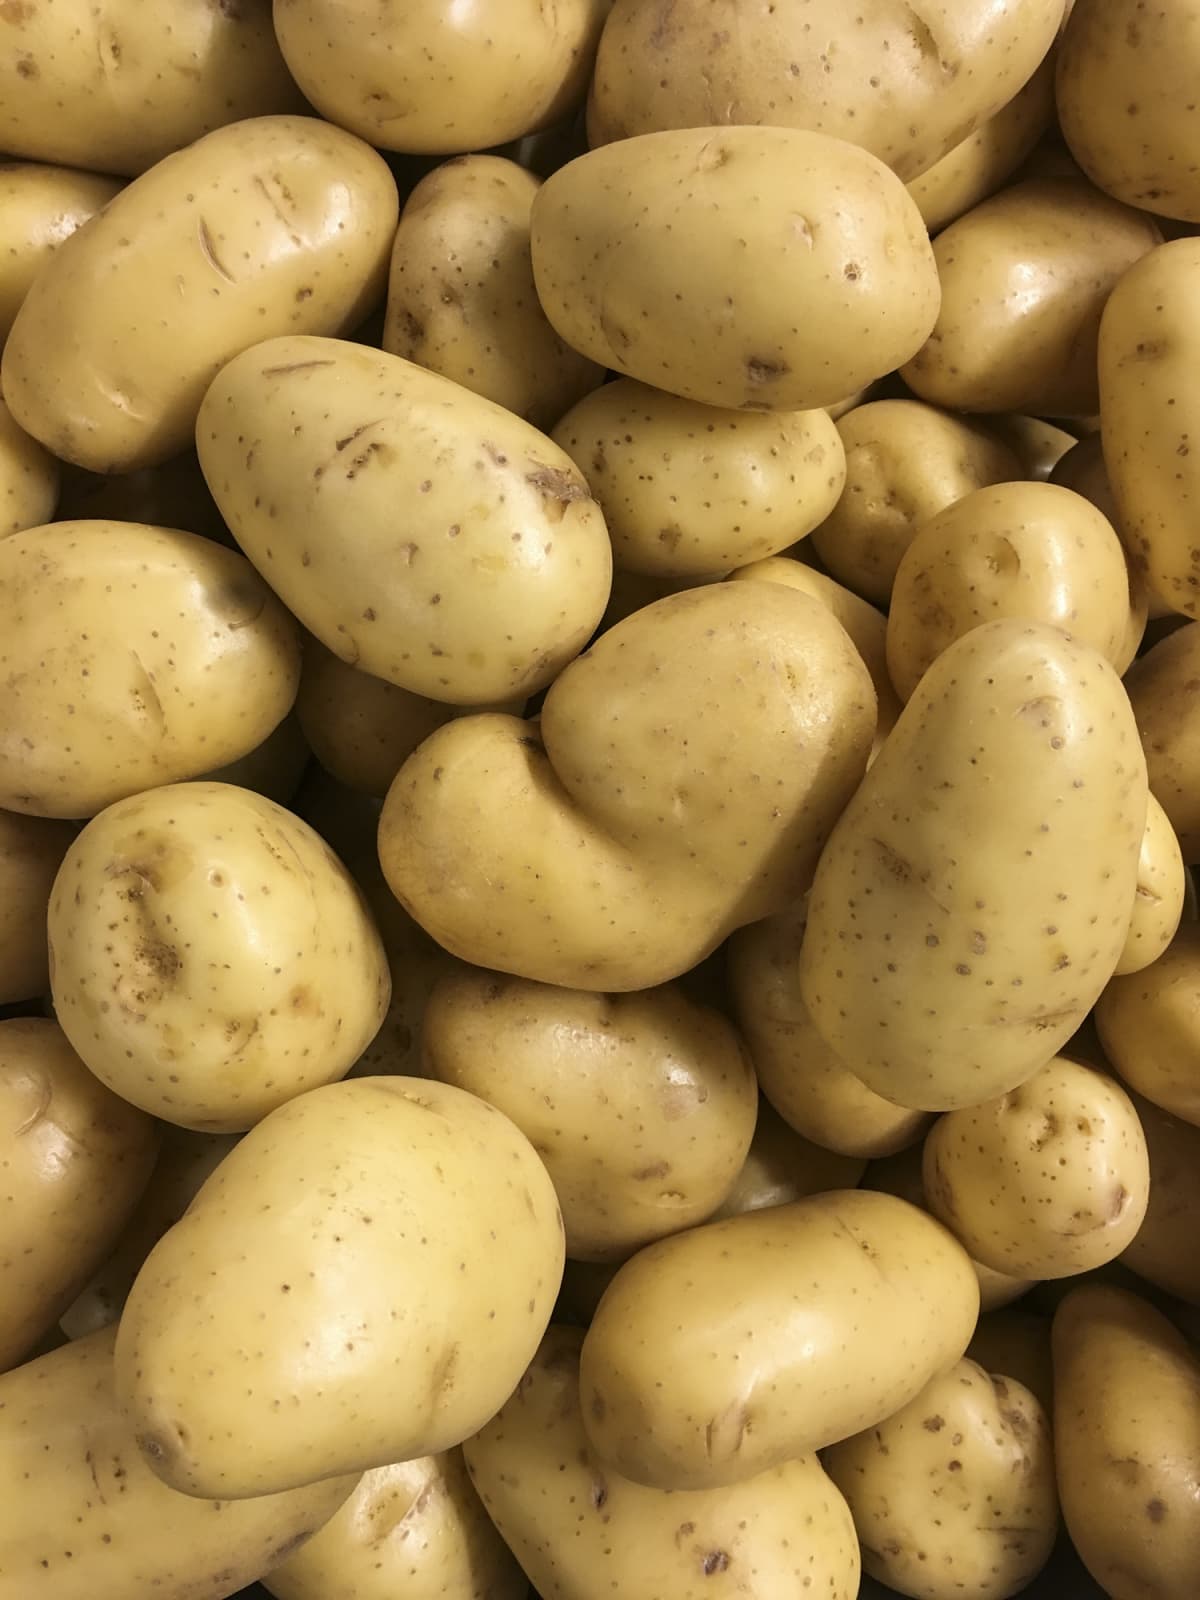 A large quantity of potatoes